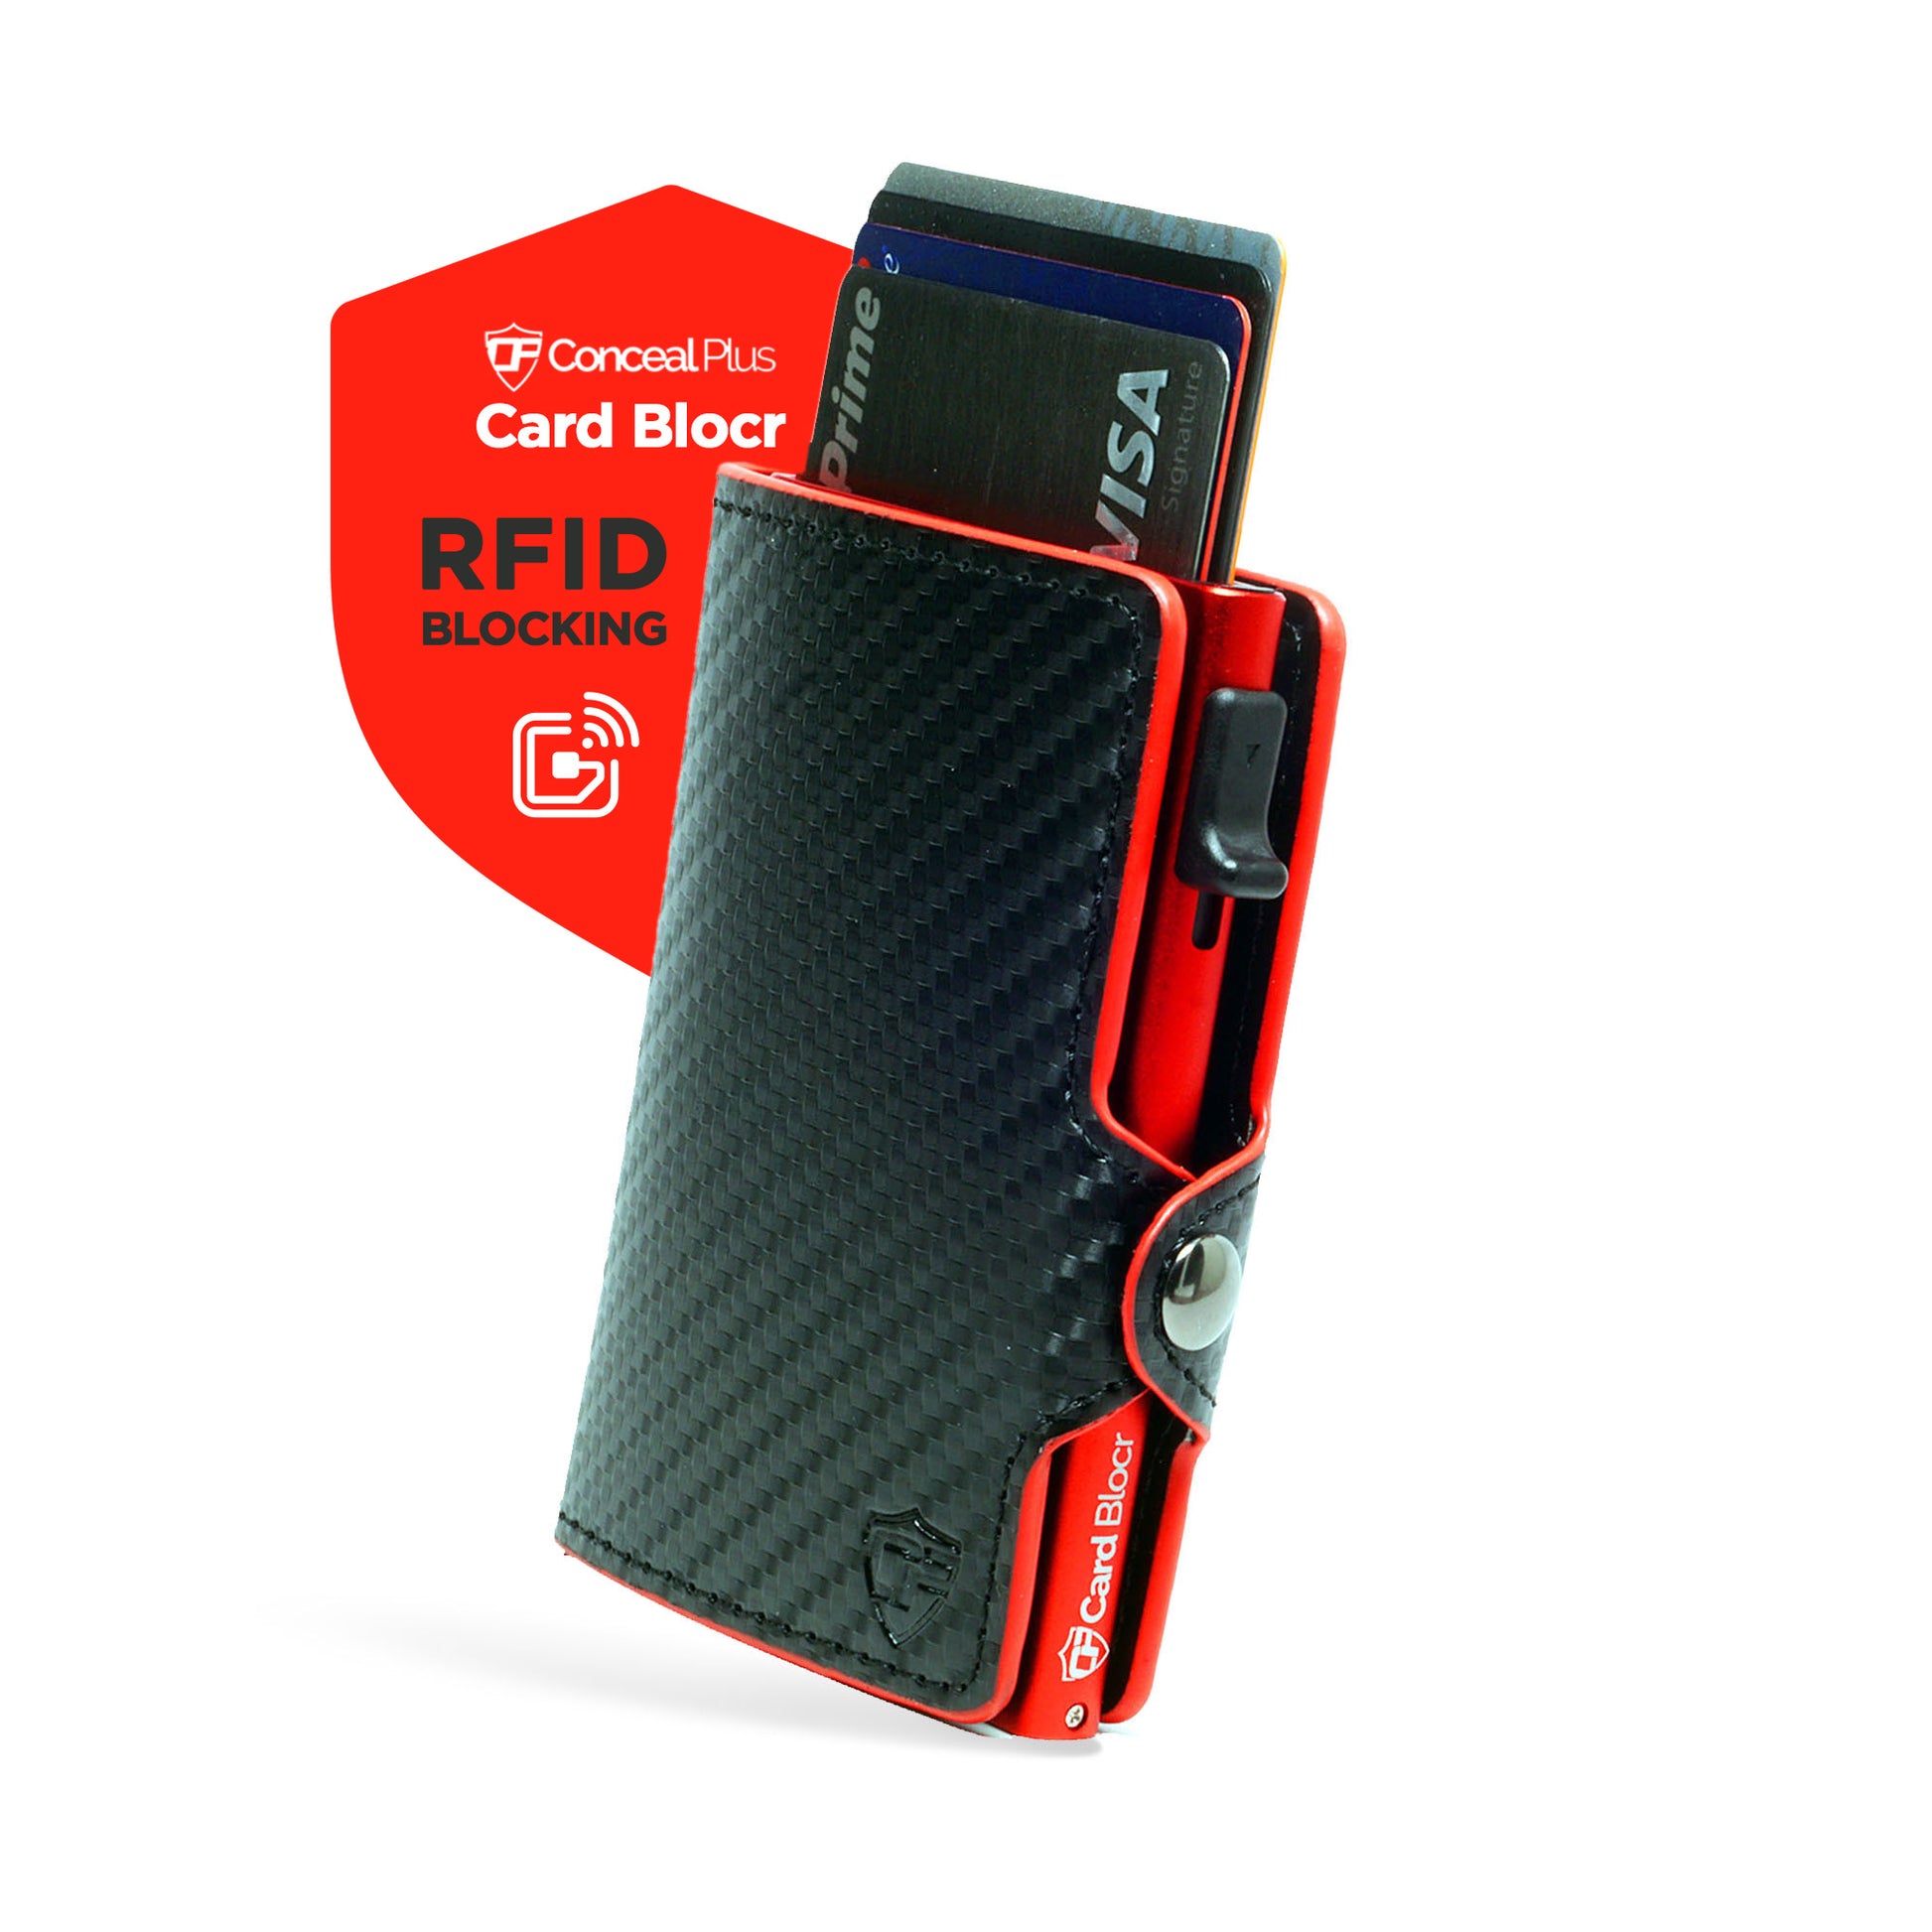 Conceal Plus Card Blocr Credit Card Wallet RFID Blocking Slim Minimalist Card Holder (Red Carbon Fiber), Carbon Fiber PU Red